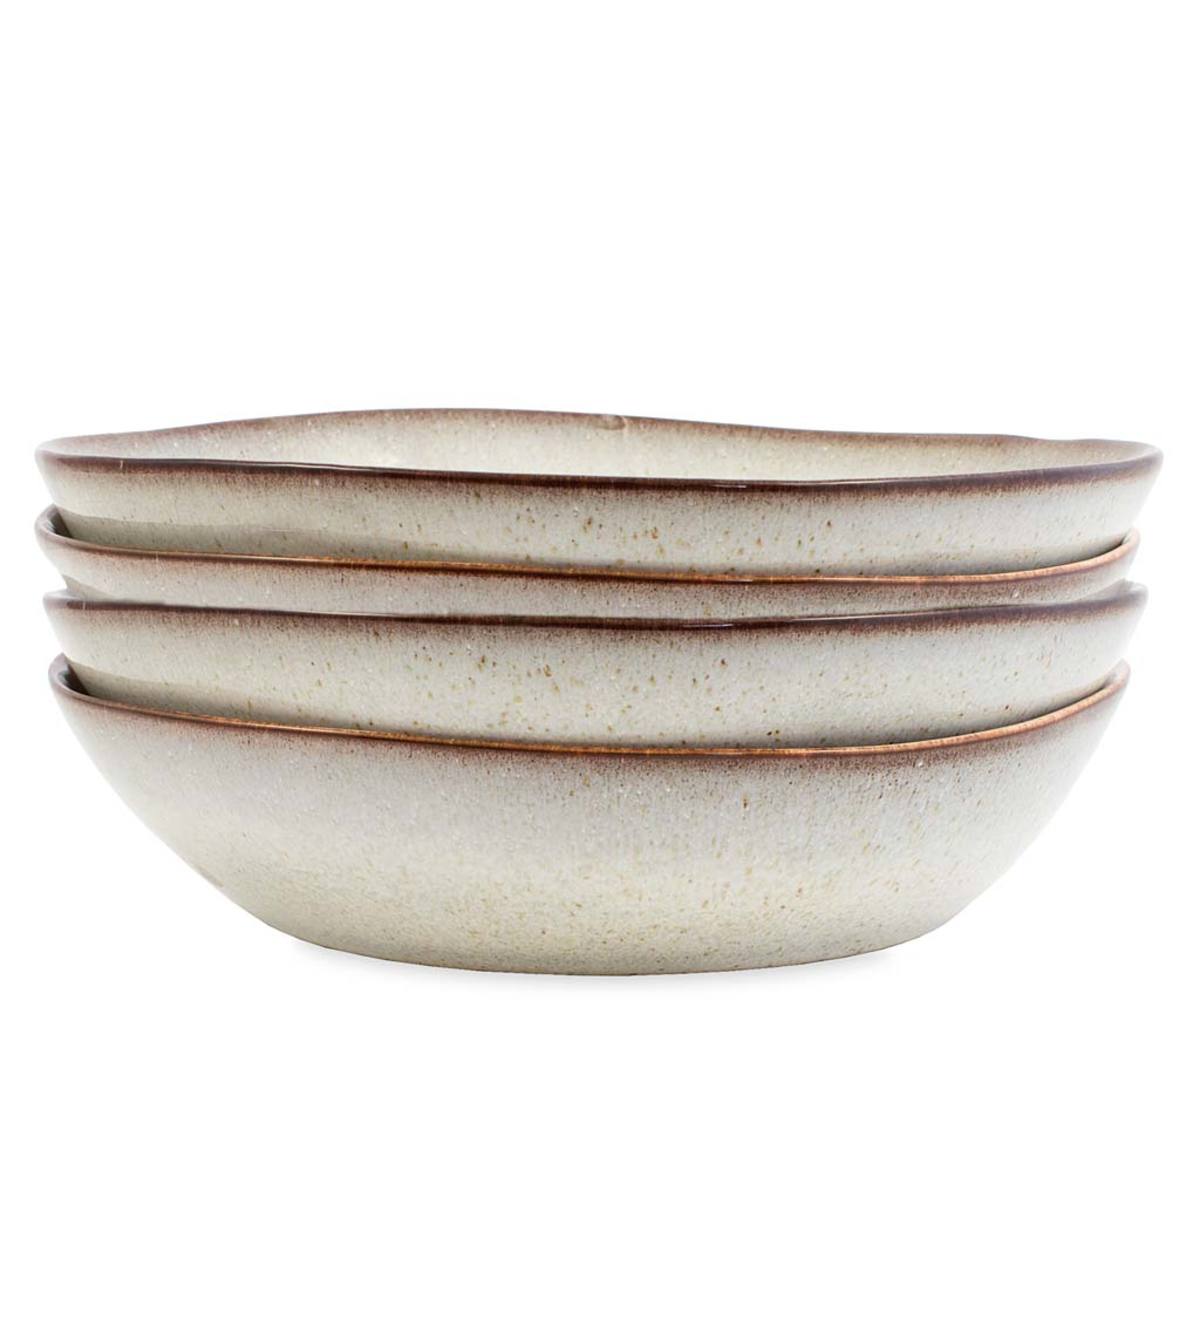 Farmstead Stoneware Pasta Bowls, Set of 4 - Bisque